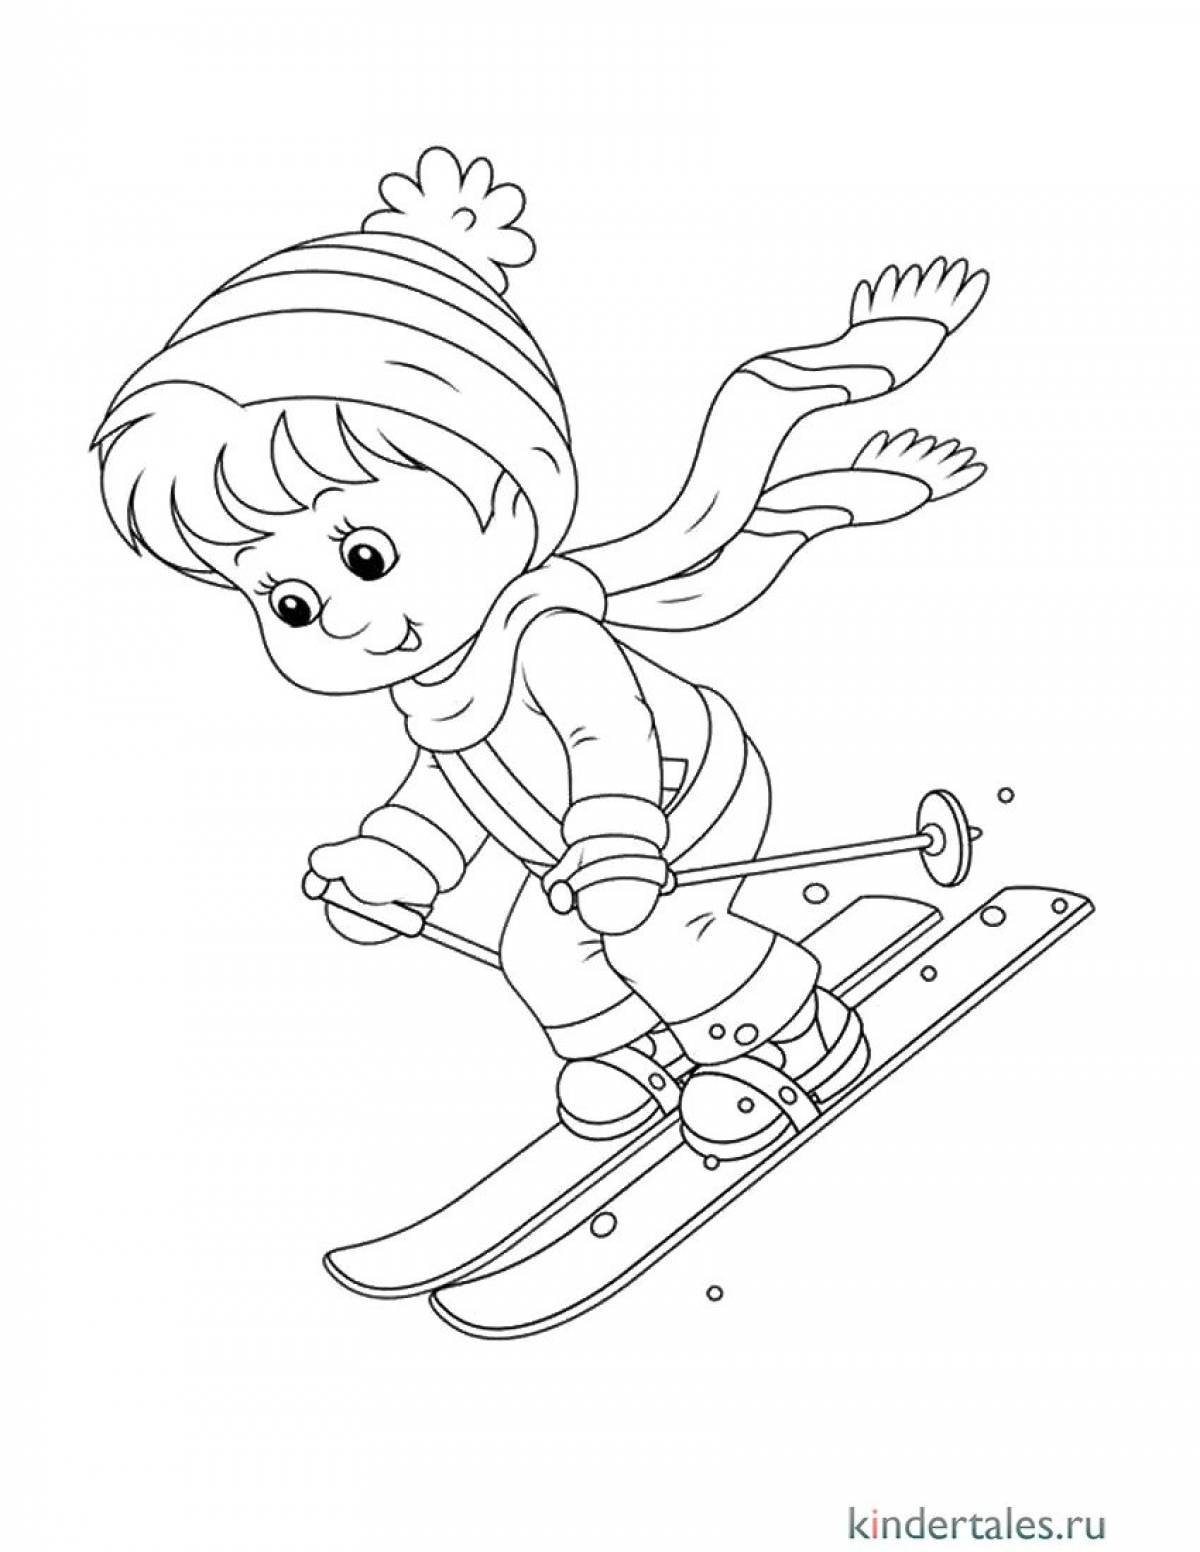 Stimulating skier coloring book for kids